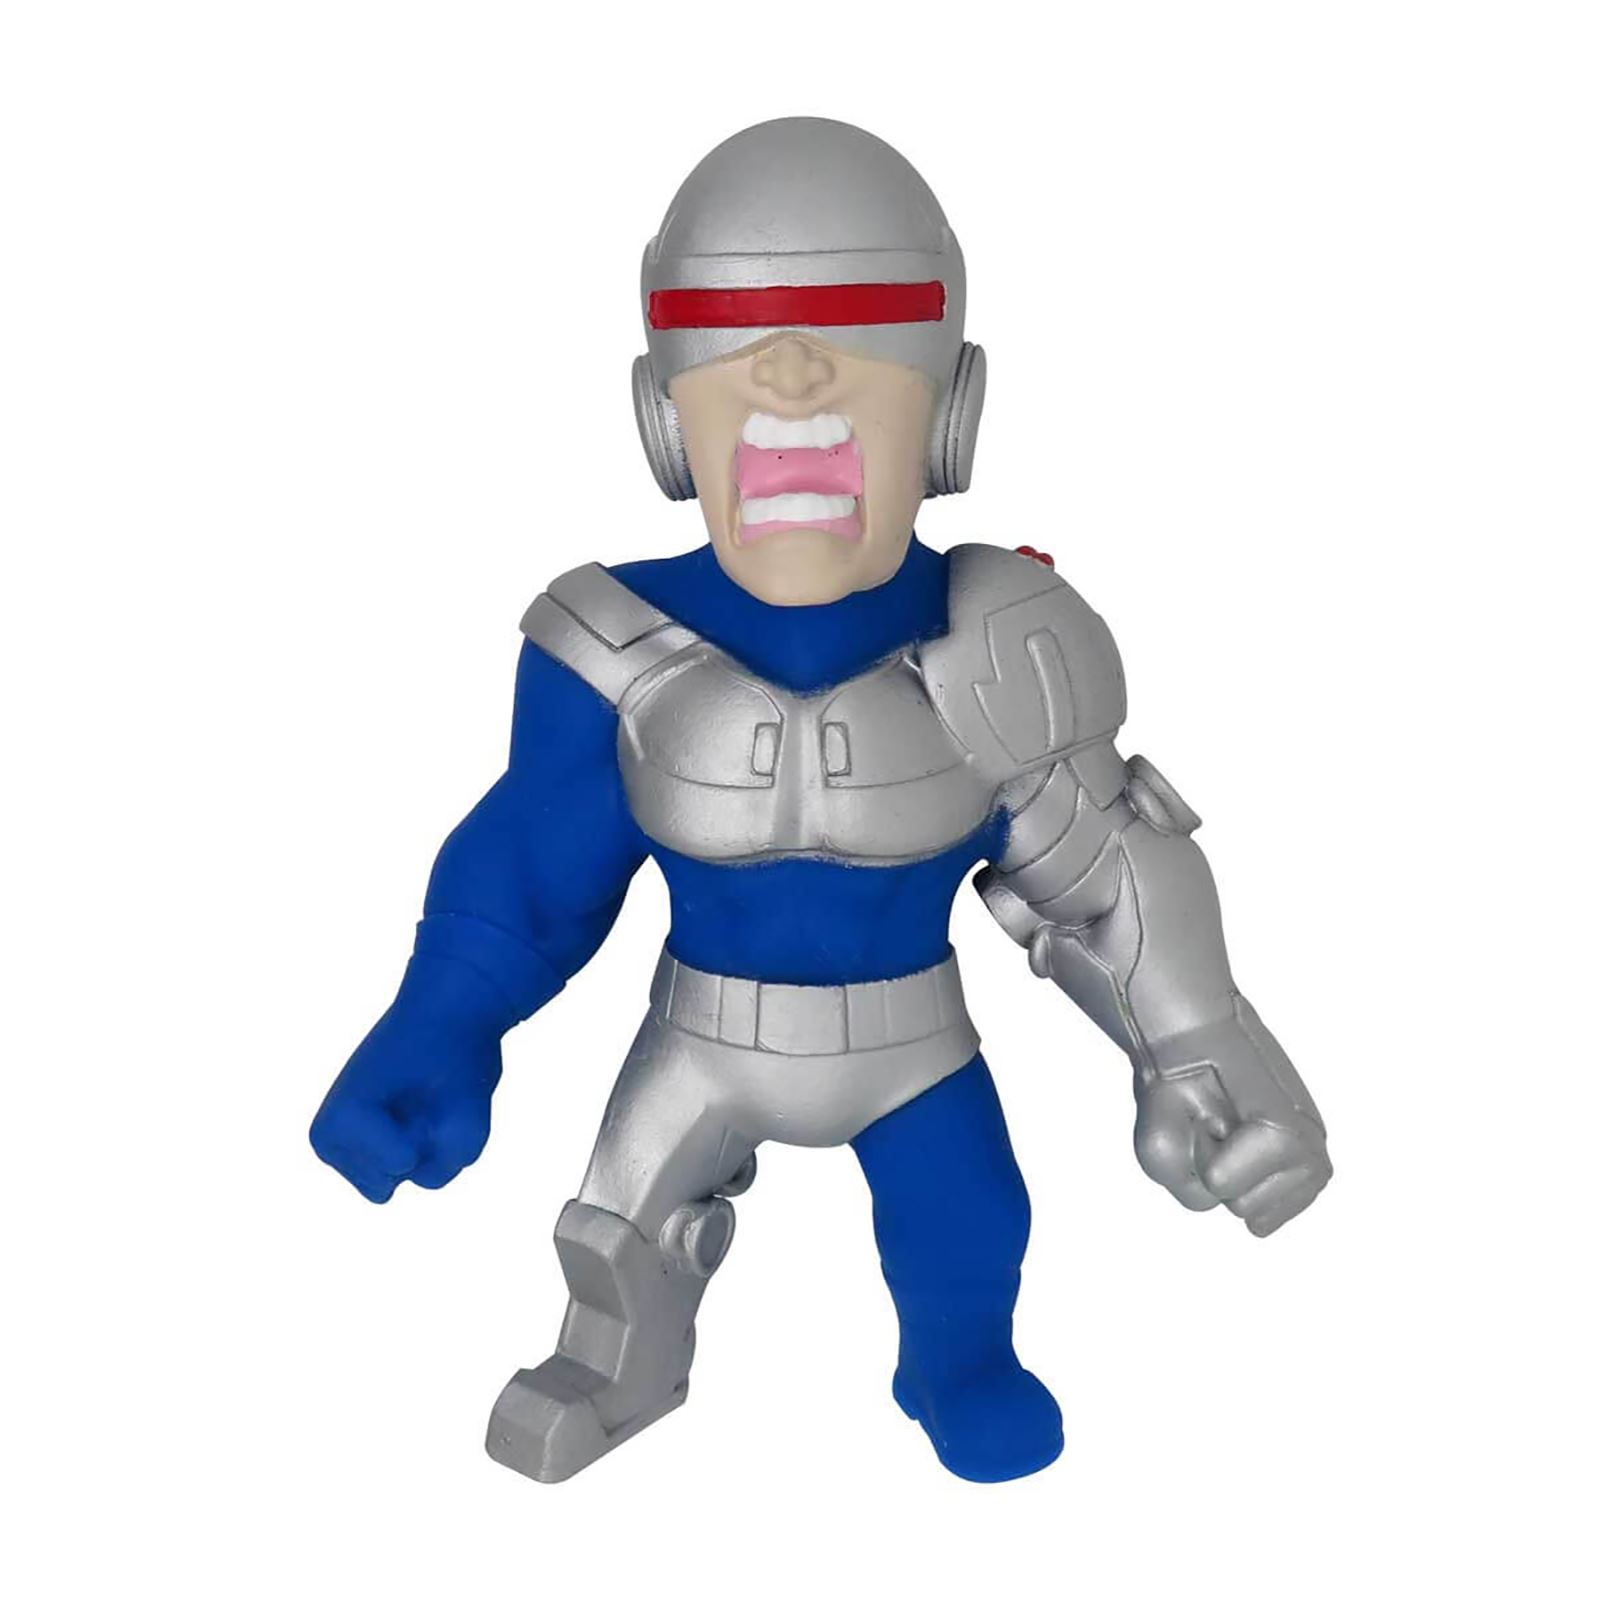 Stretch Monsterflex Süper Esnek Figür Oyuncaklar Cyborg Krem-Mavi